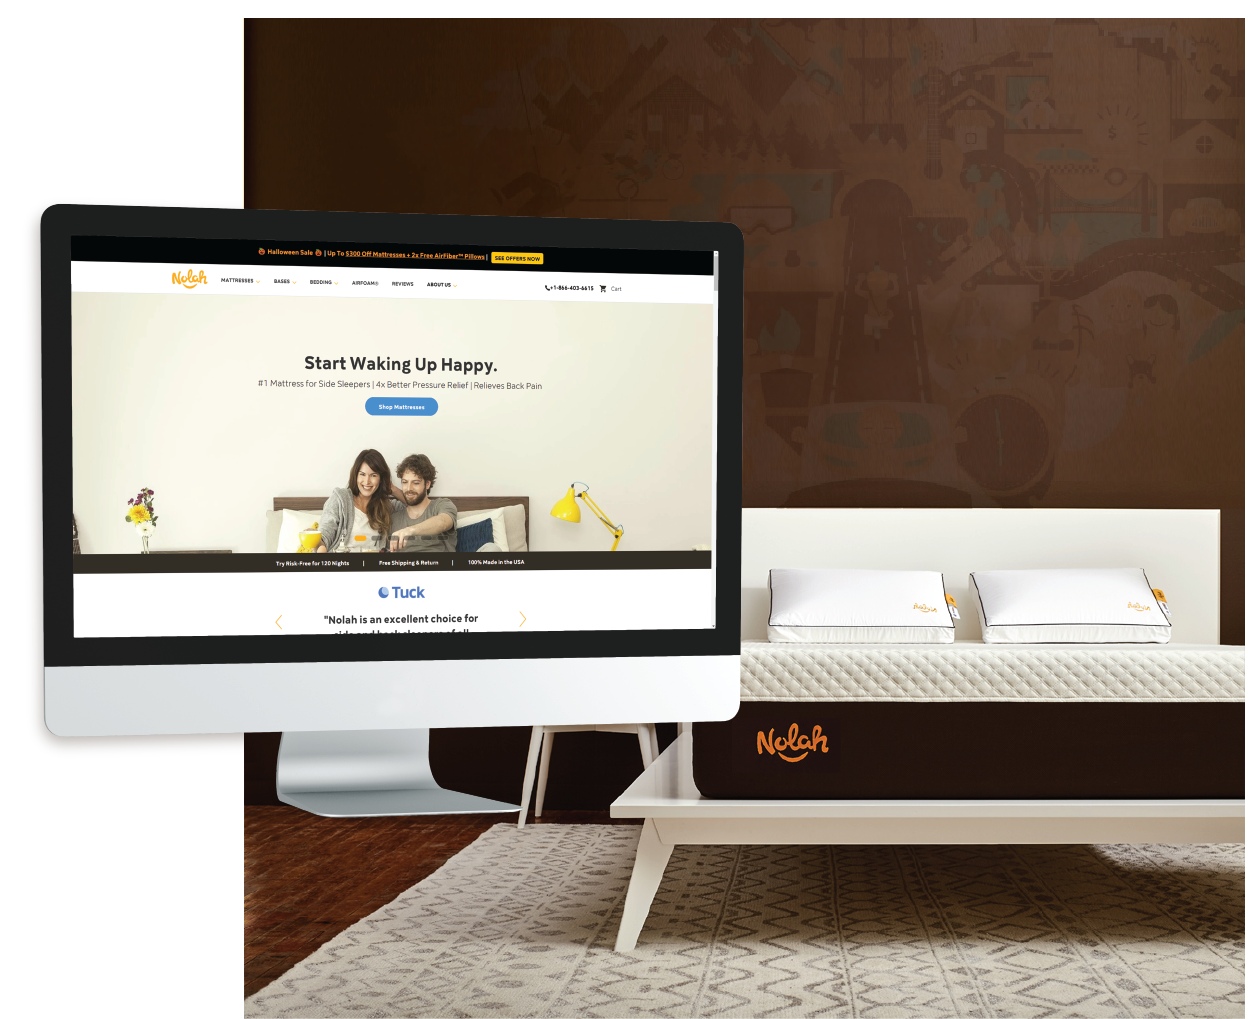 image of Nolah Mattress website on desktop over image of mattress background